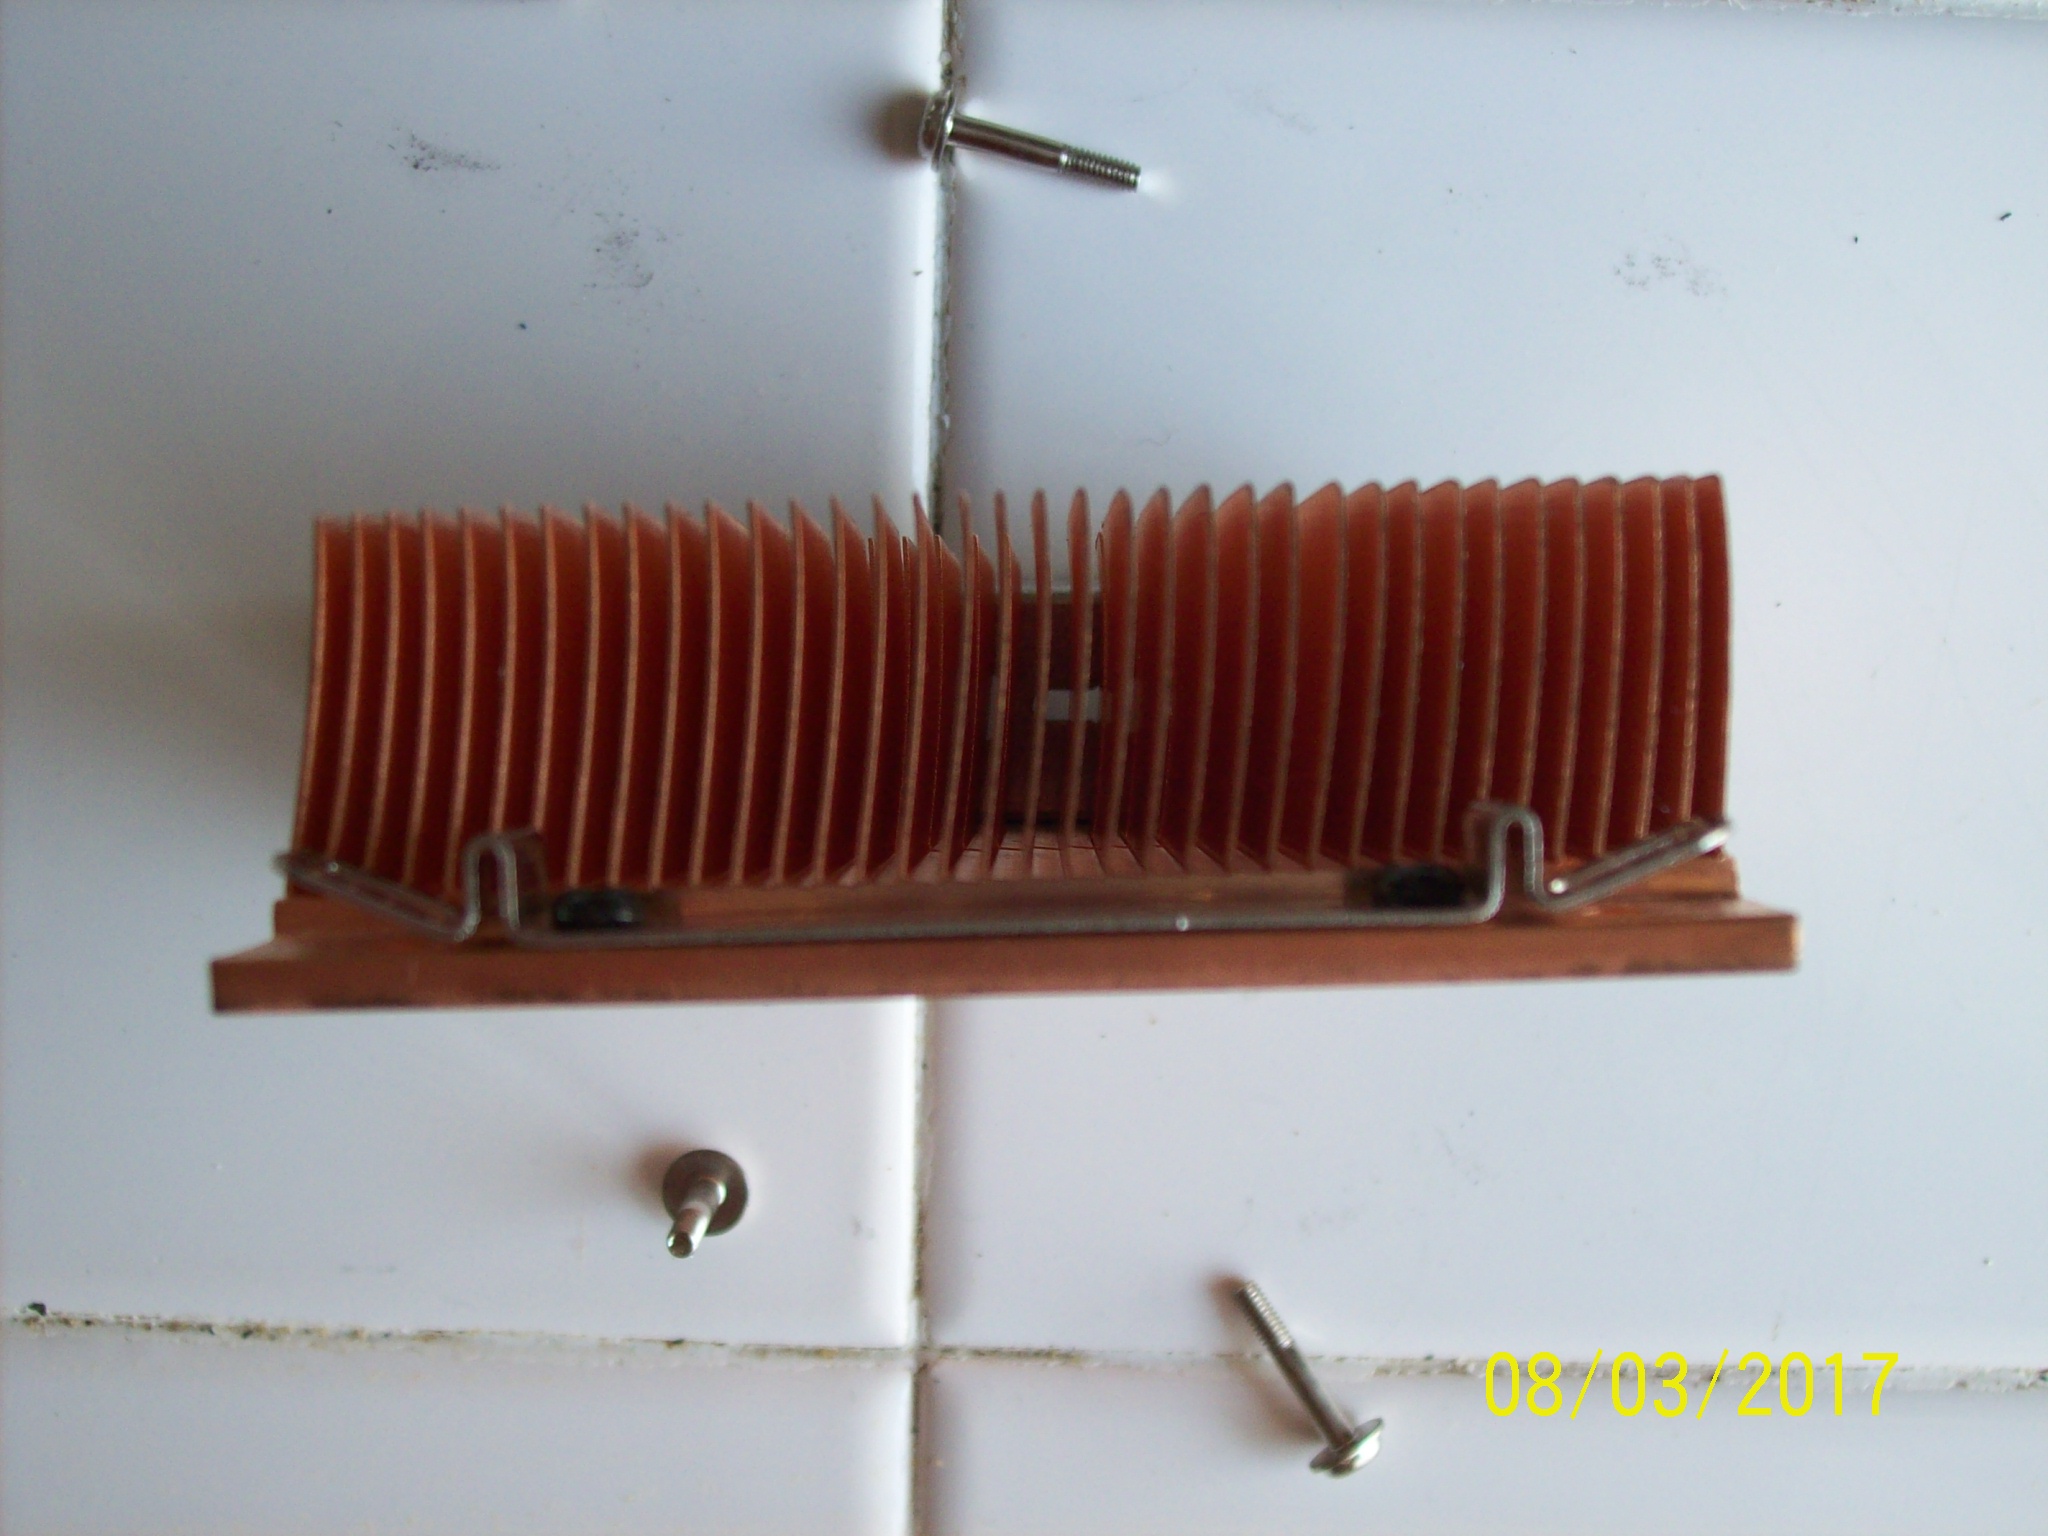 Juniper WX-20 Copper Heatsink with mounting bracket, screws